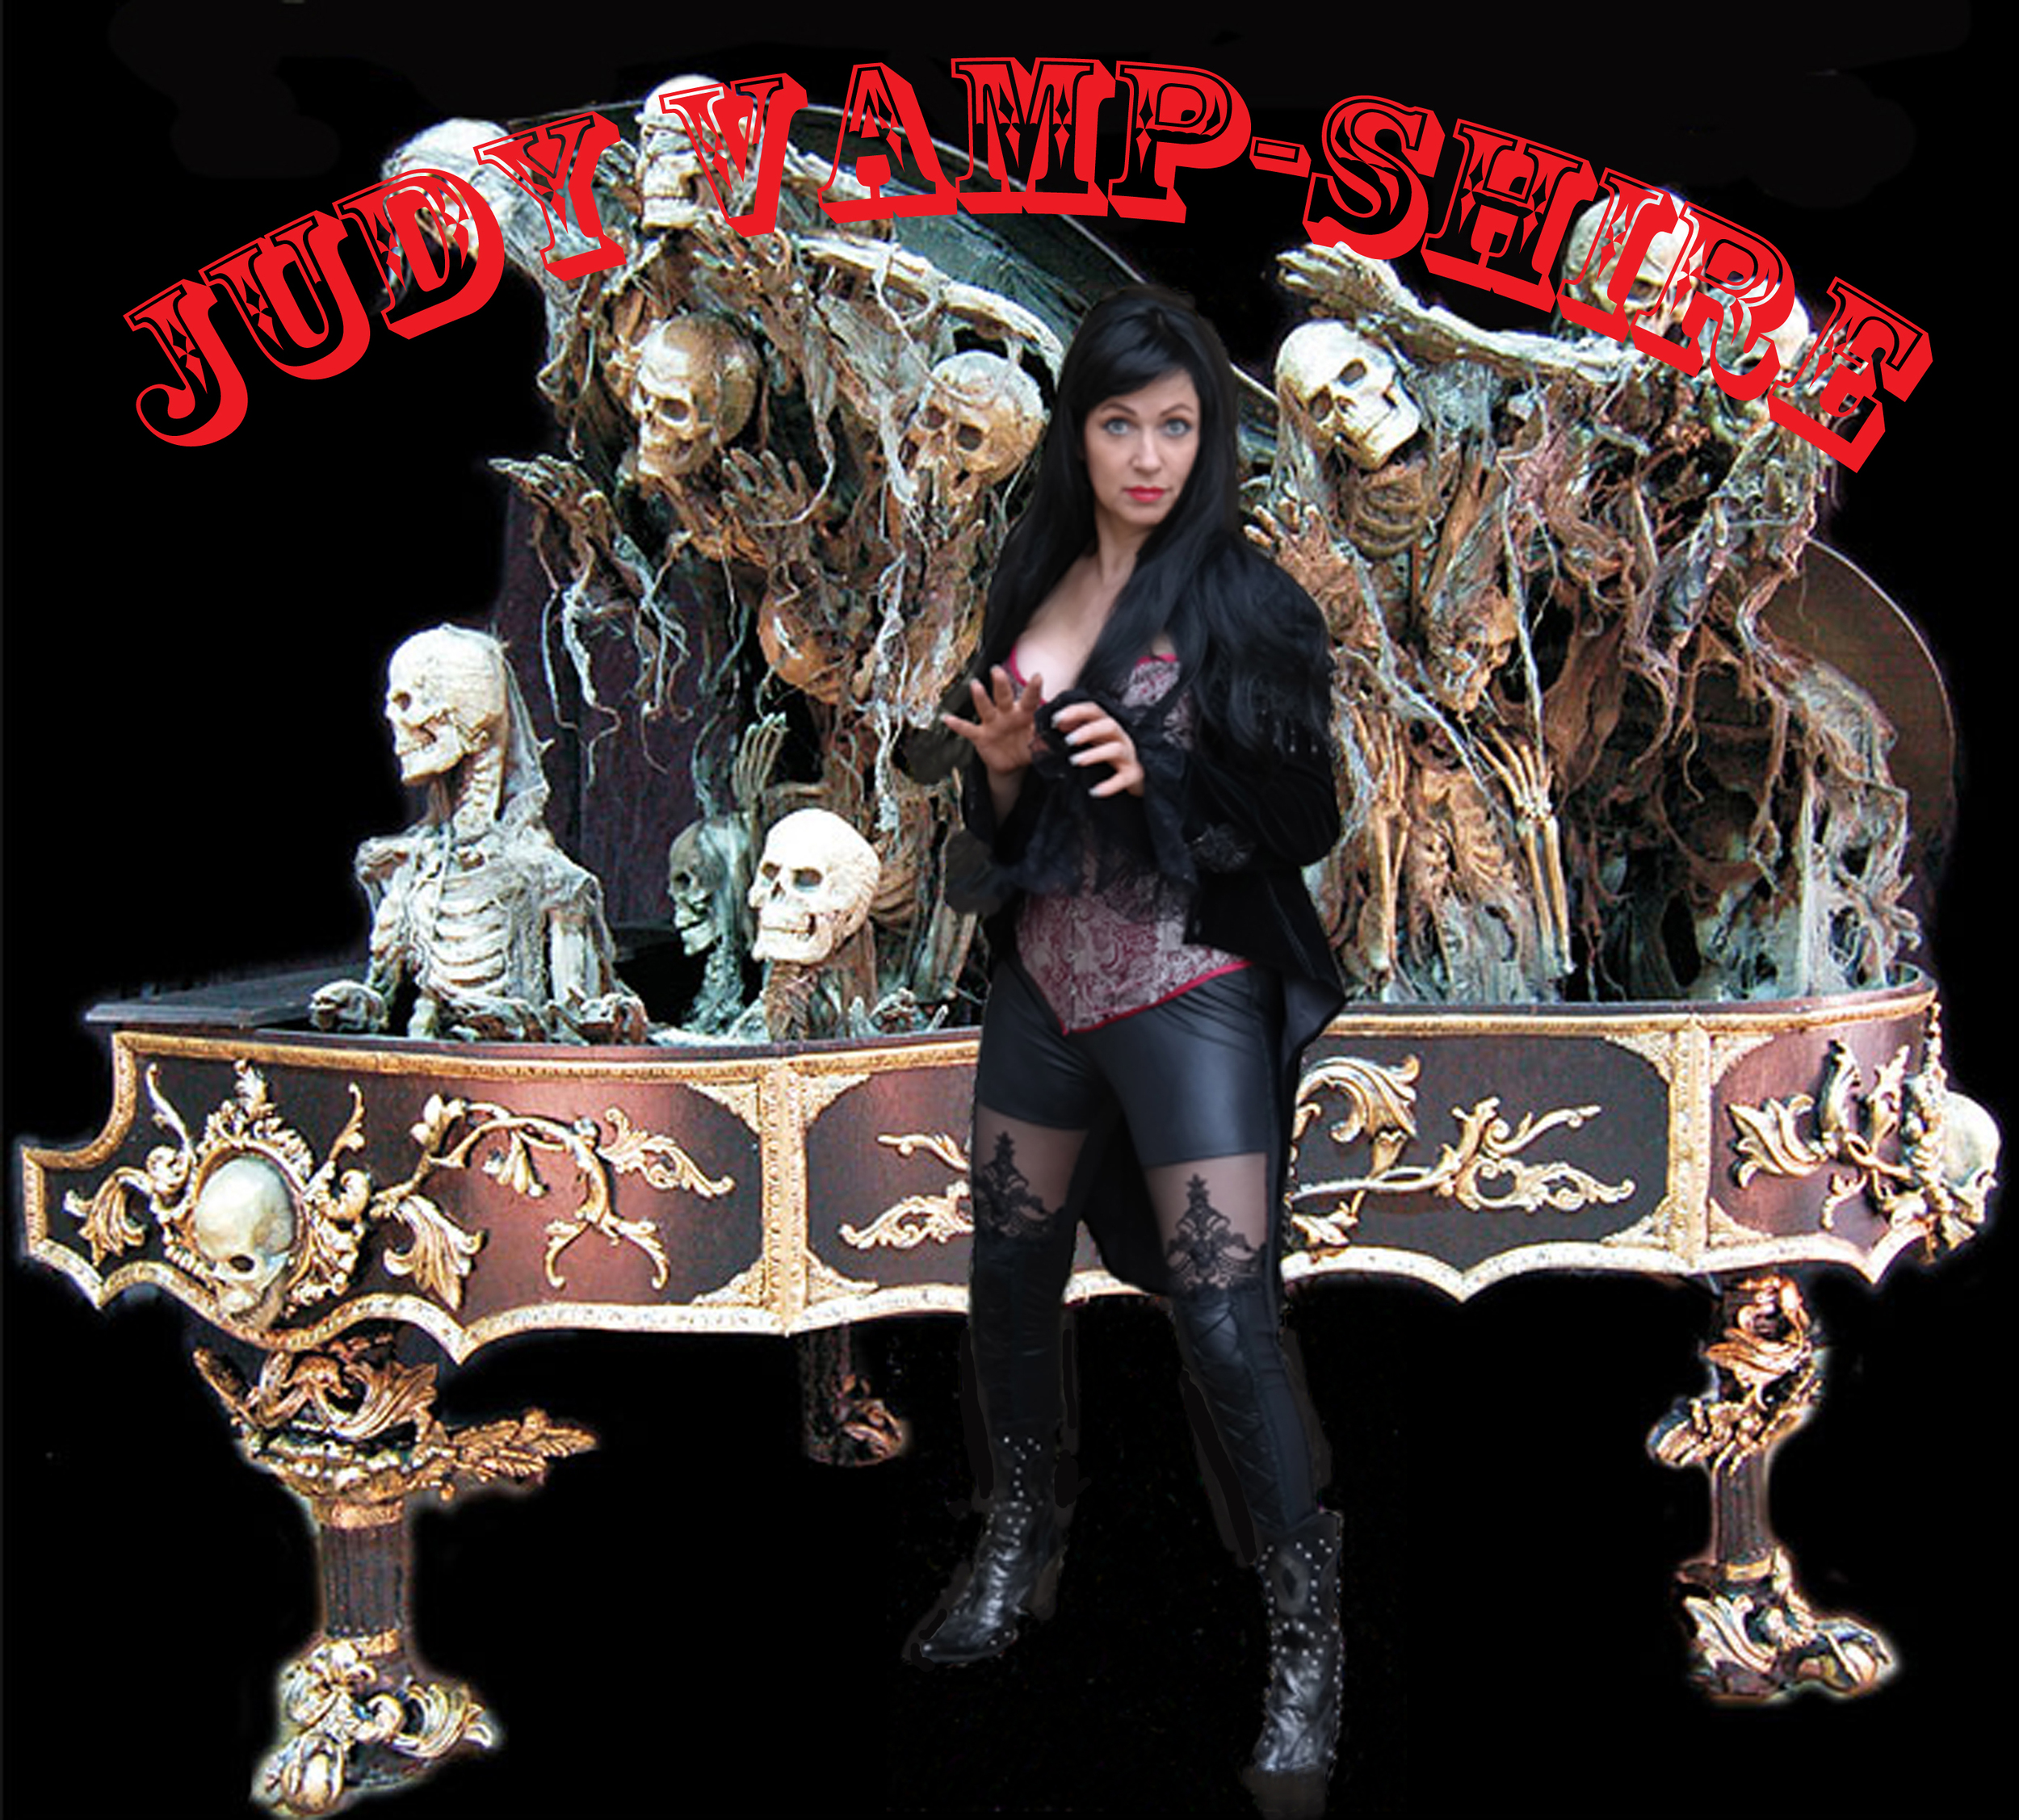 judy-vampire-piano-2_edited-1 copy.jpg